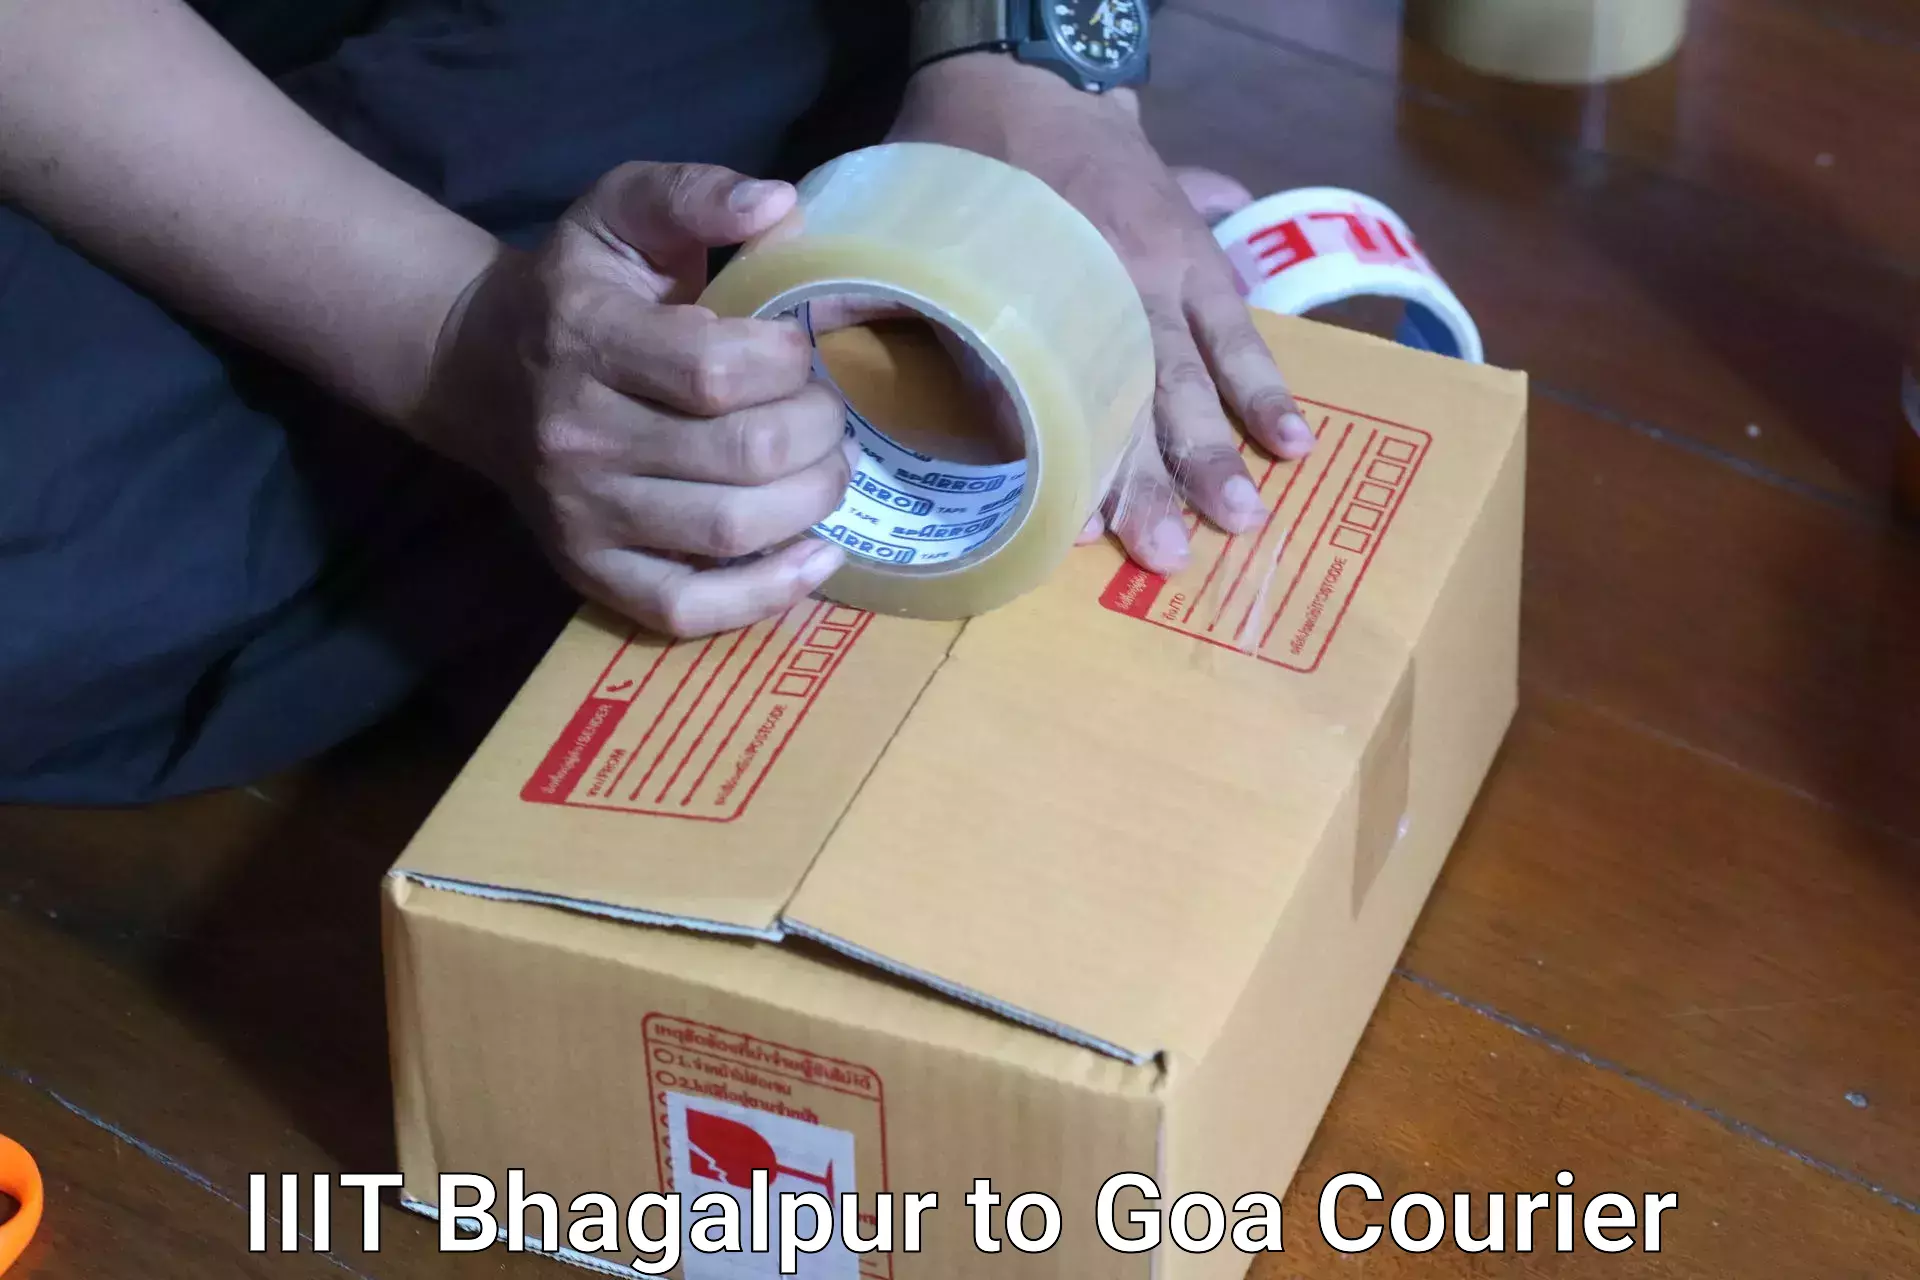 Luggage shipment processing IIIT Bhagalpur to IIT Goa